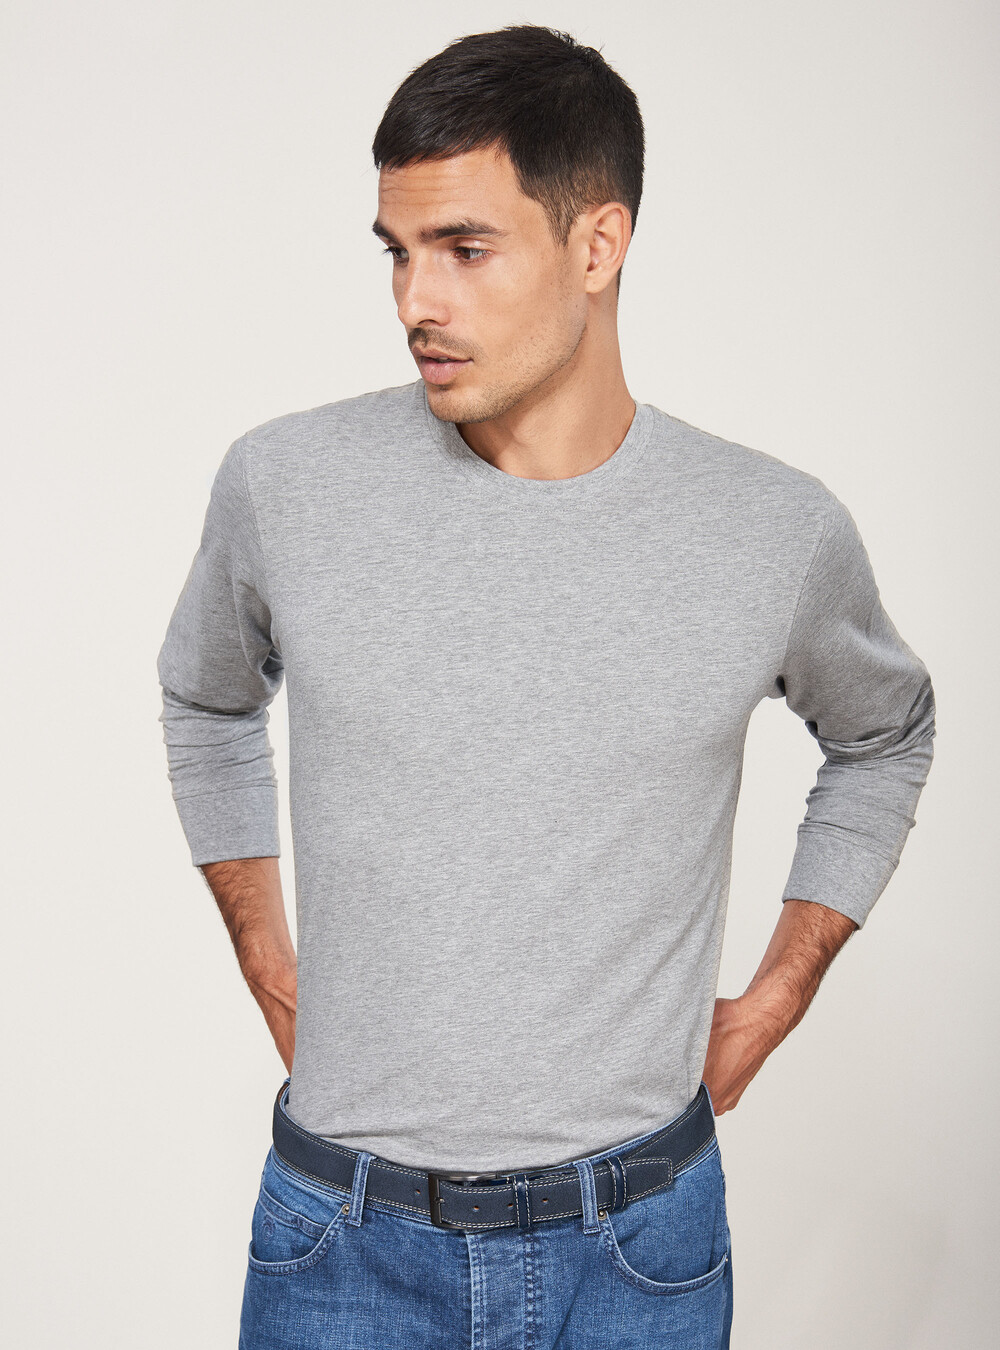 Long-sleeved stretch cotton T-shirt | GutteridgeUS | Clothing Uomo